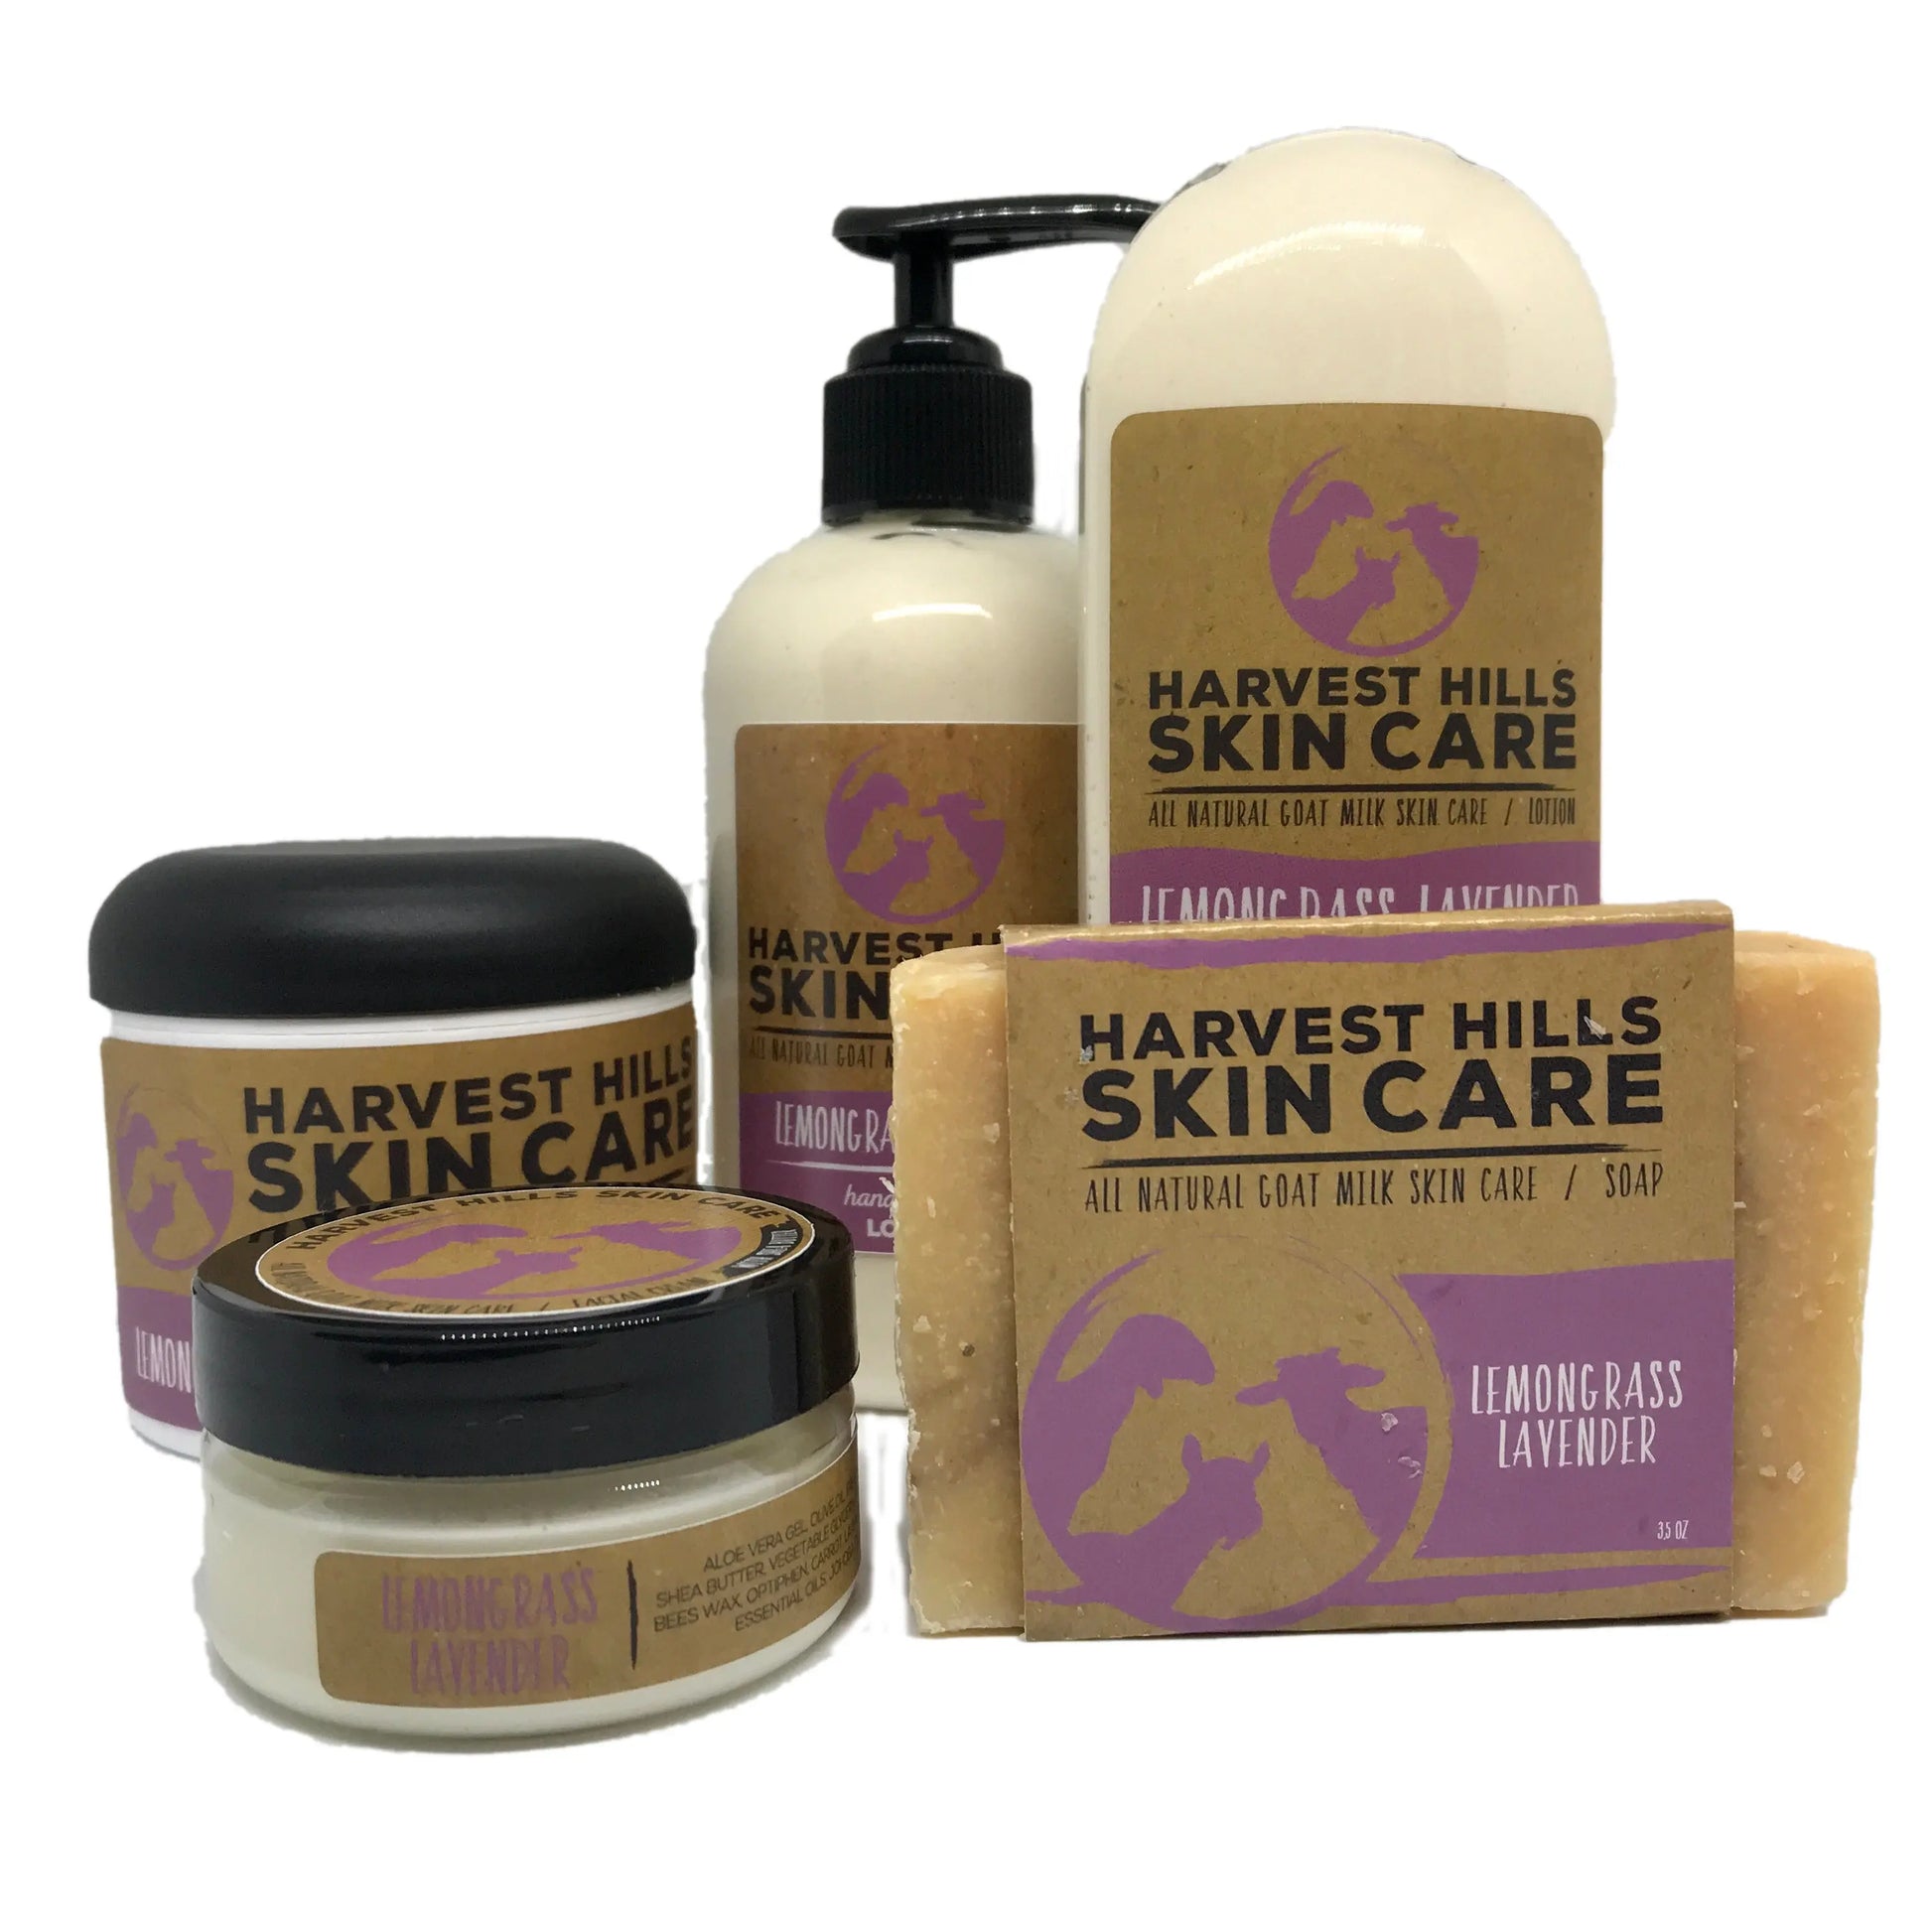 Lemongrass Lavender Soap Harvest Hills Skin Care All Natural Goat Milk Skin Care